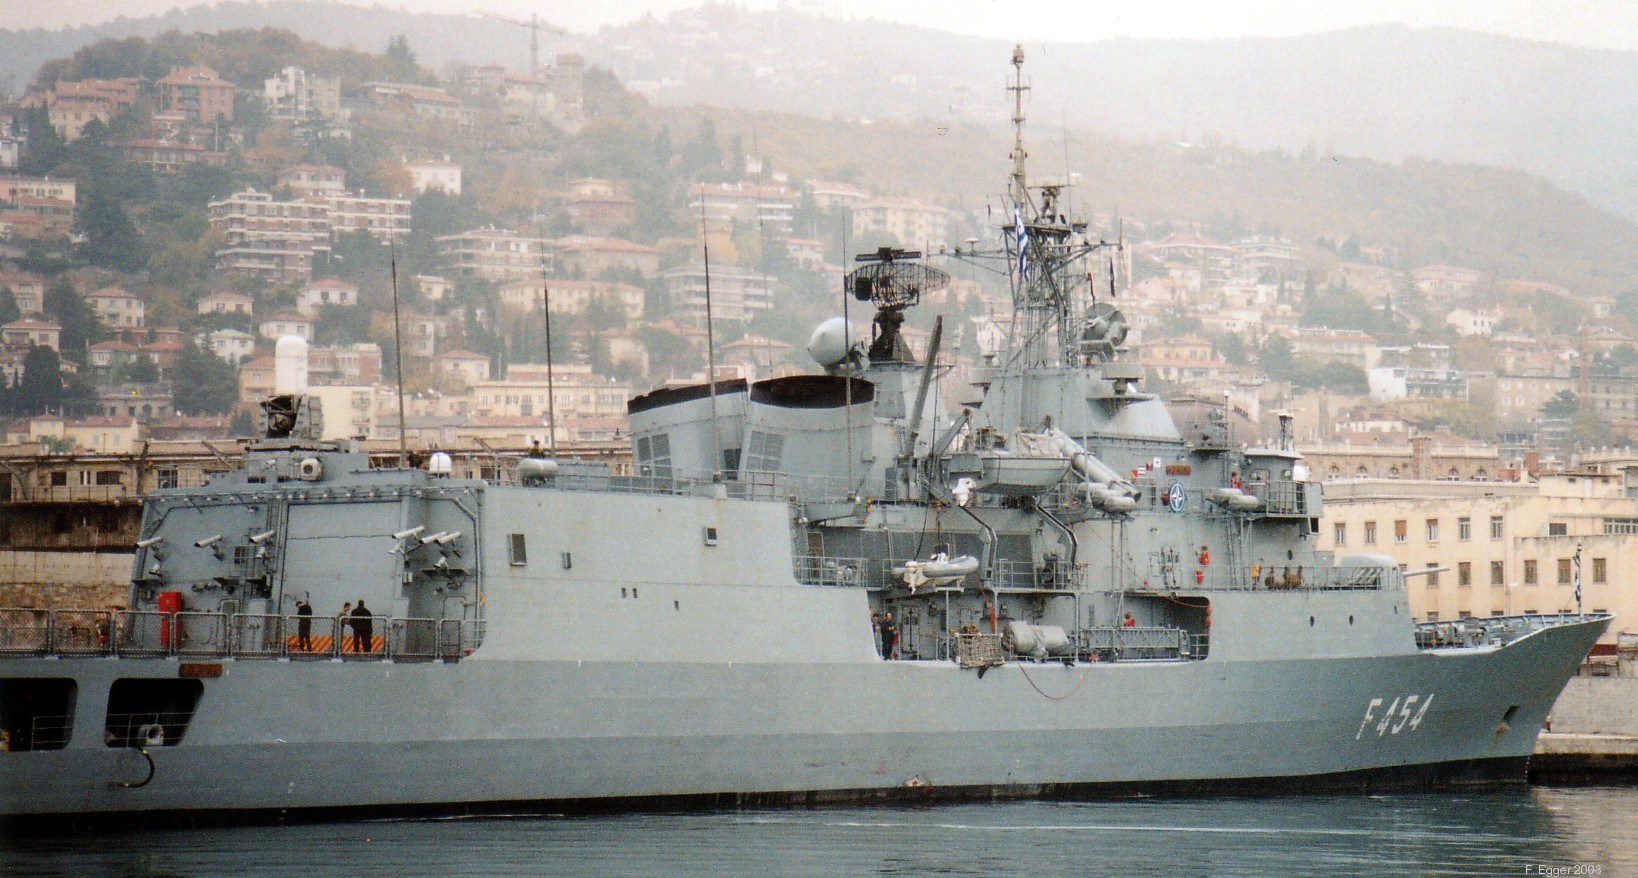 f 454 hs psara hydra class frigate meko-200hn hellenic navy greece nato standing naval force mediterranean stanavformed trieste italy 2003 11